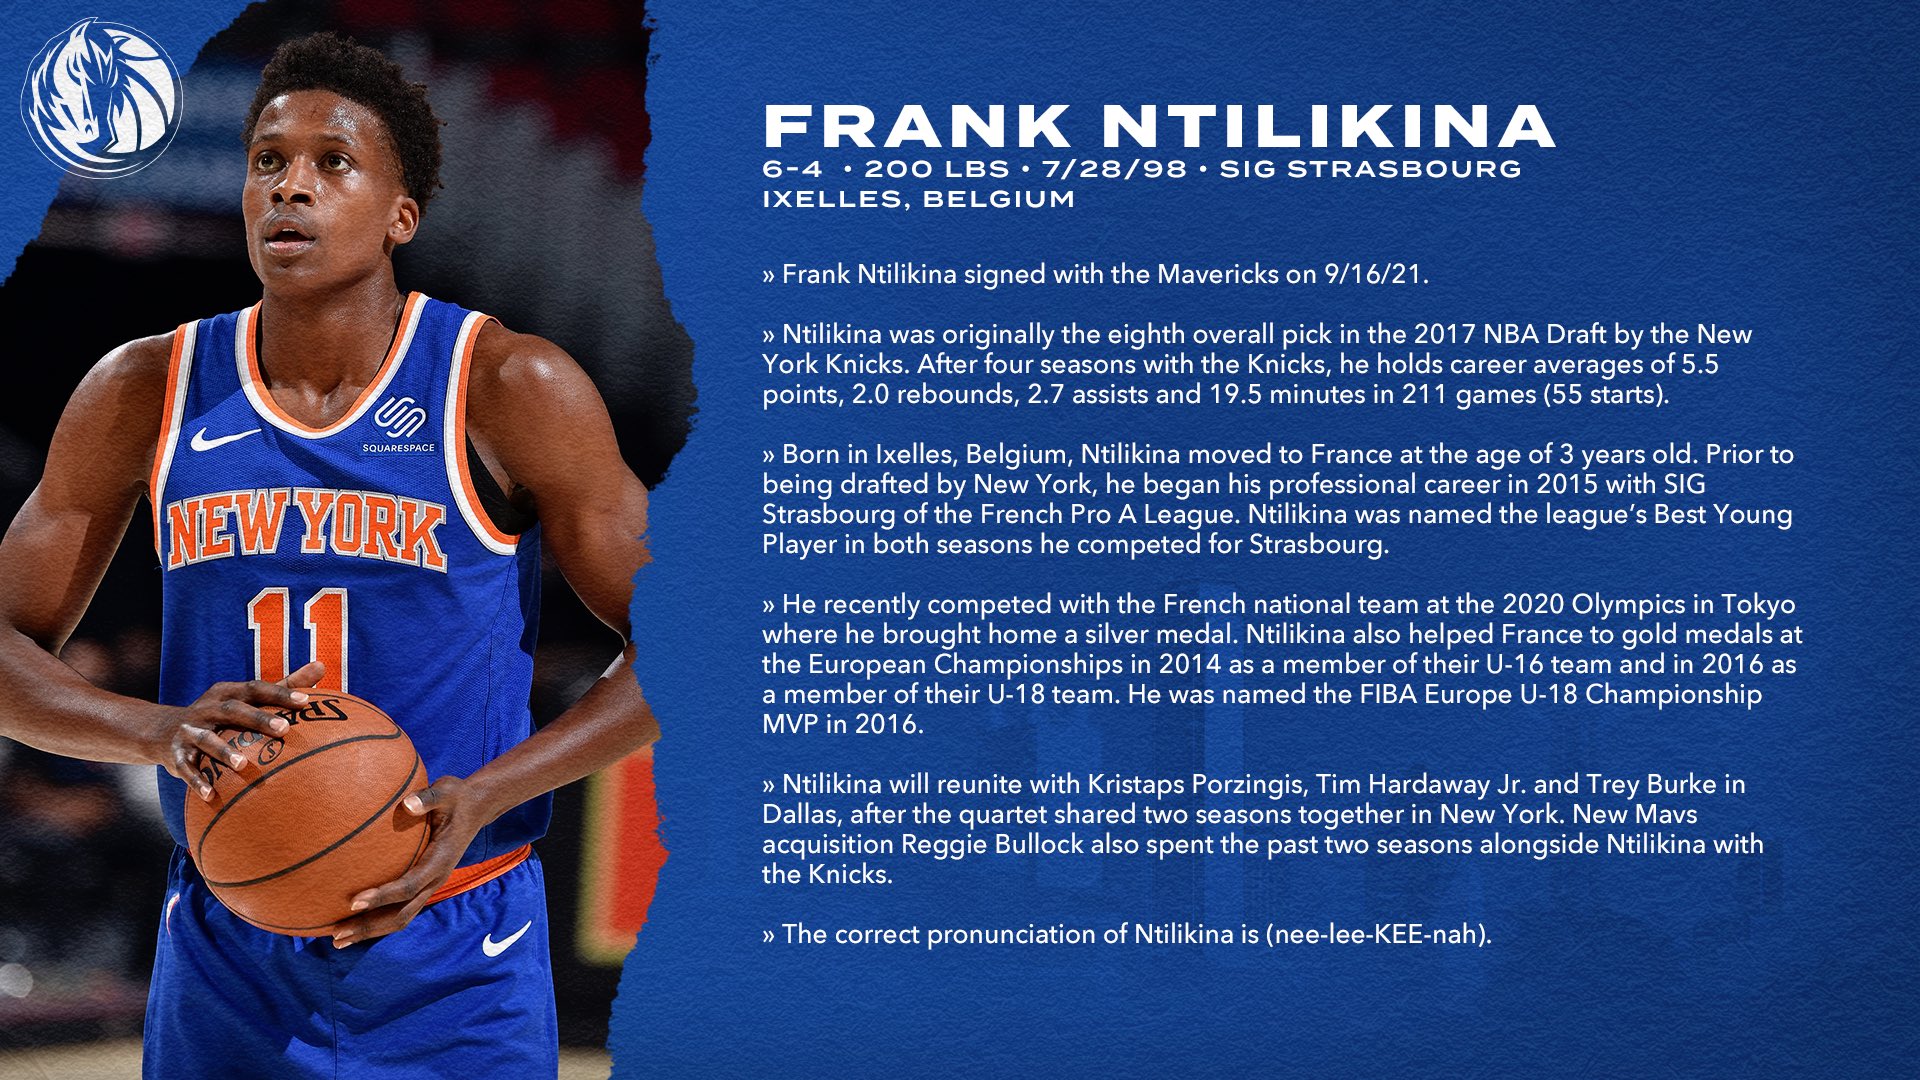 Ex-Knick Frank Ntilikina likely to sign with Mavericks: report